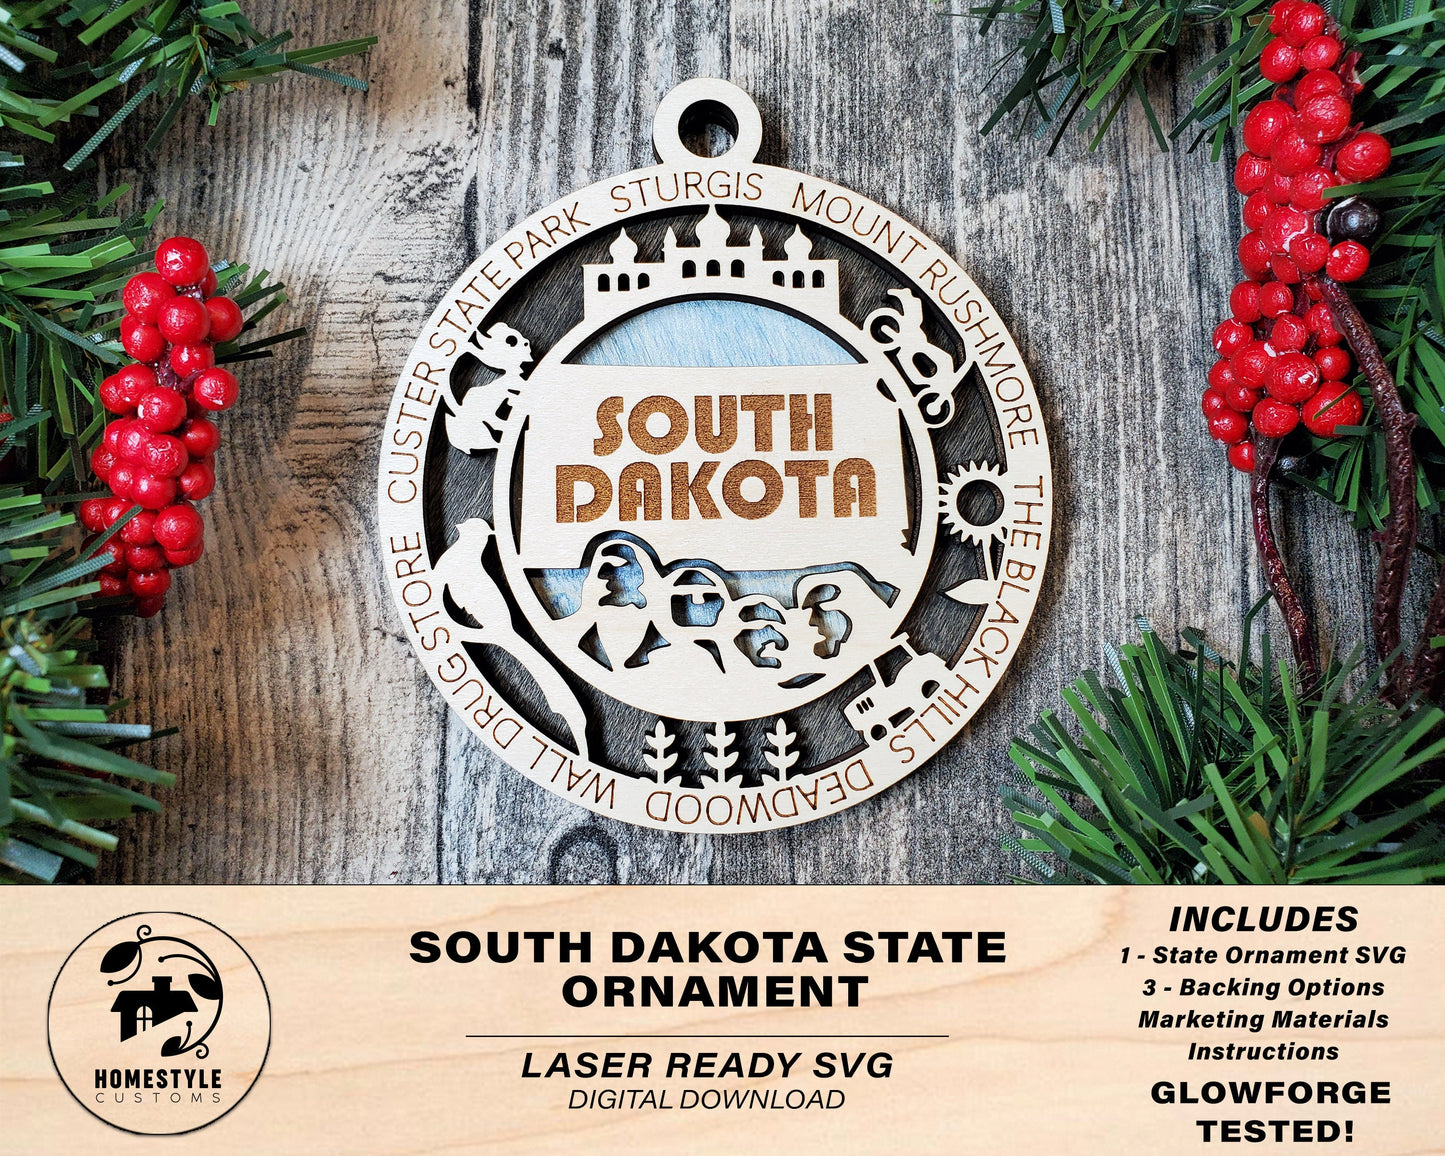 South Dakota State Ornament - SVG File Download - Sized for Glowforge - Laser Ready Digital Files